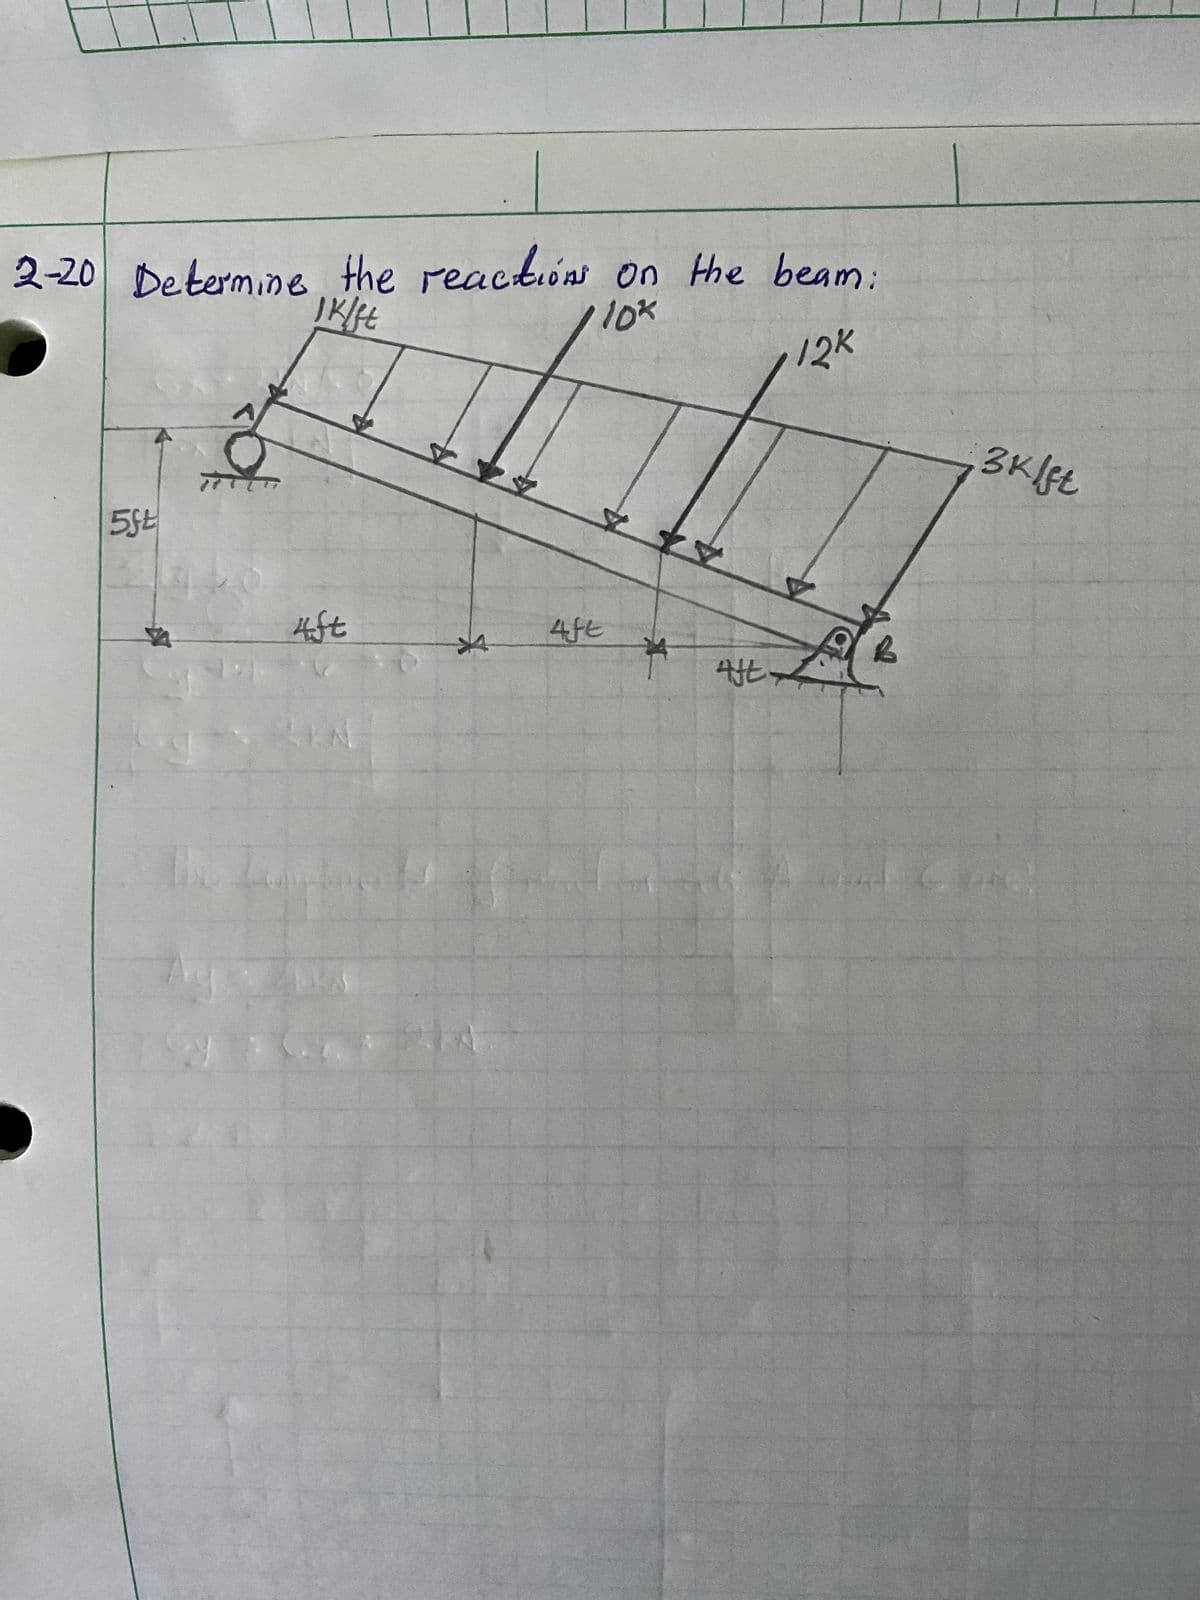 2-20 Determine the reactions on the beam:
I Kft
10k
12K
Of
5ft
34
9
INS
Y
4ft
LIN
BEN
4ft
Aft
B
3 klft